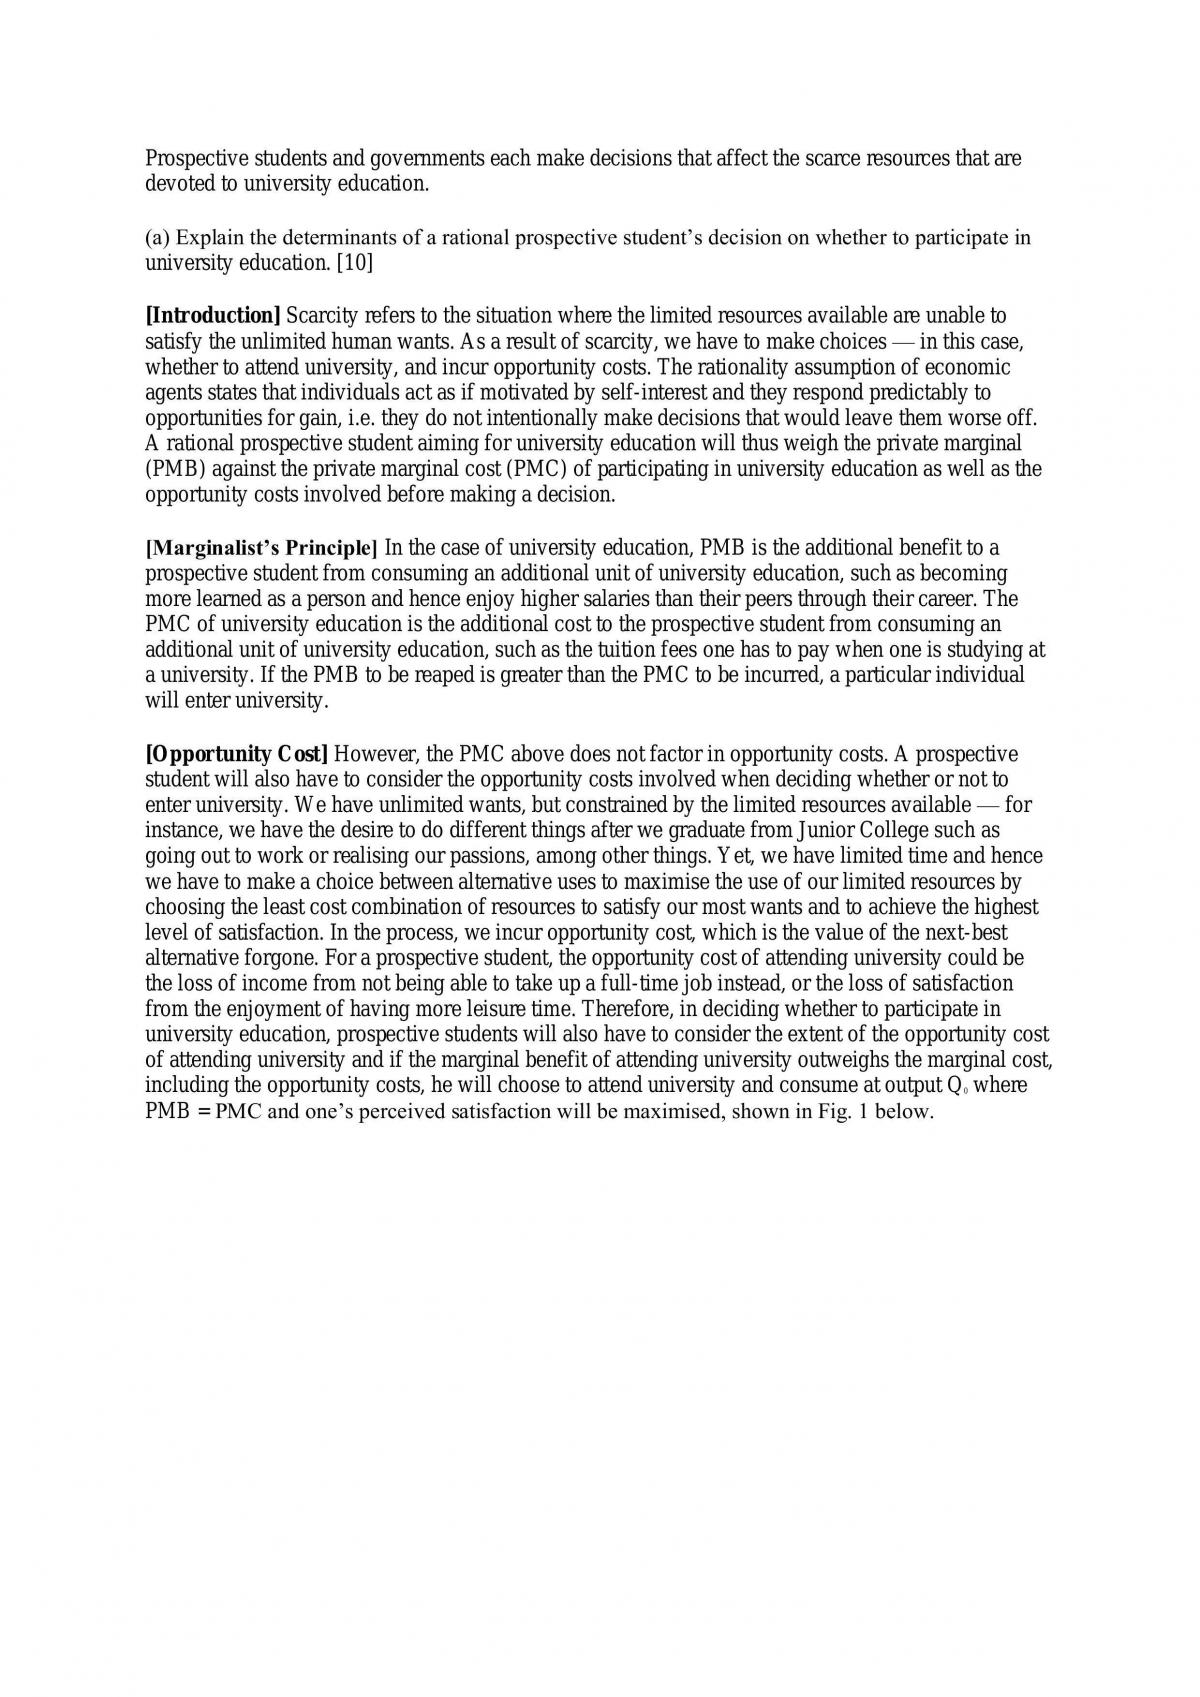 Decision Making (University Education) Essay - Page 1